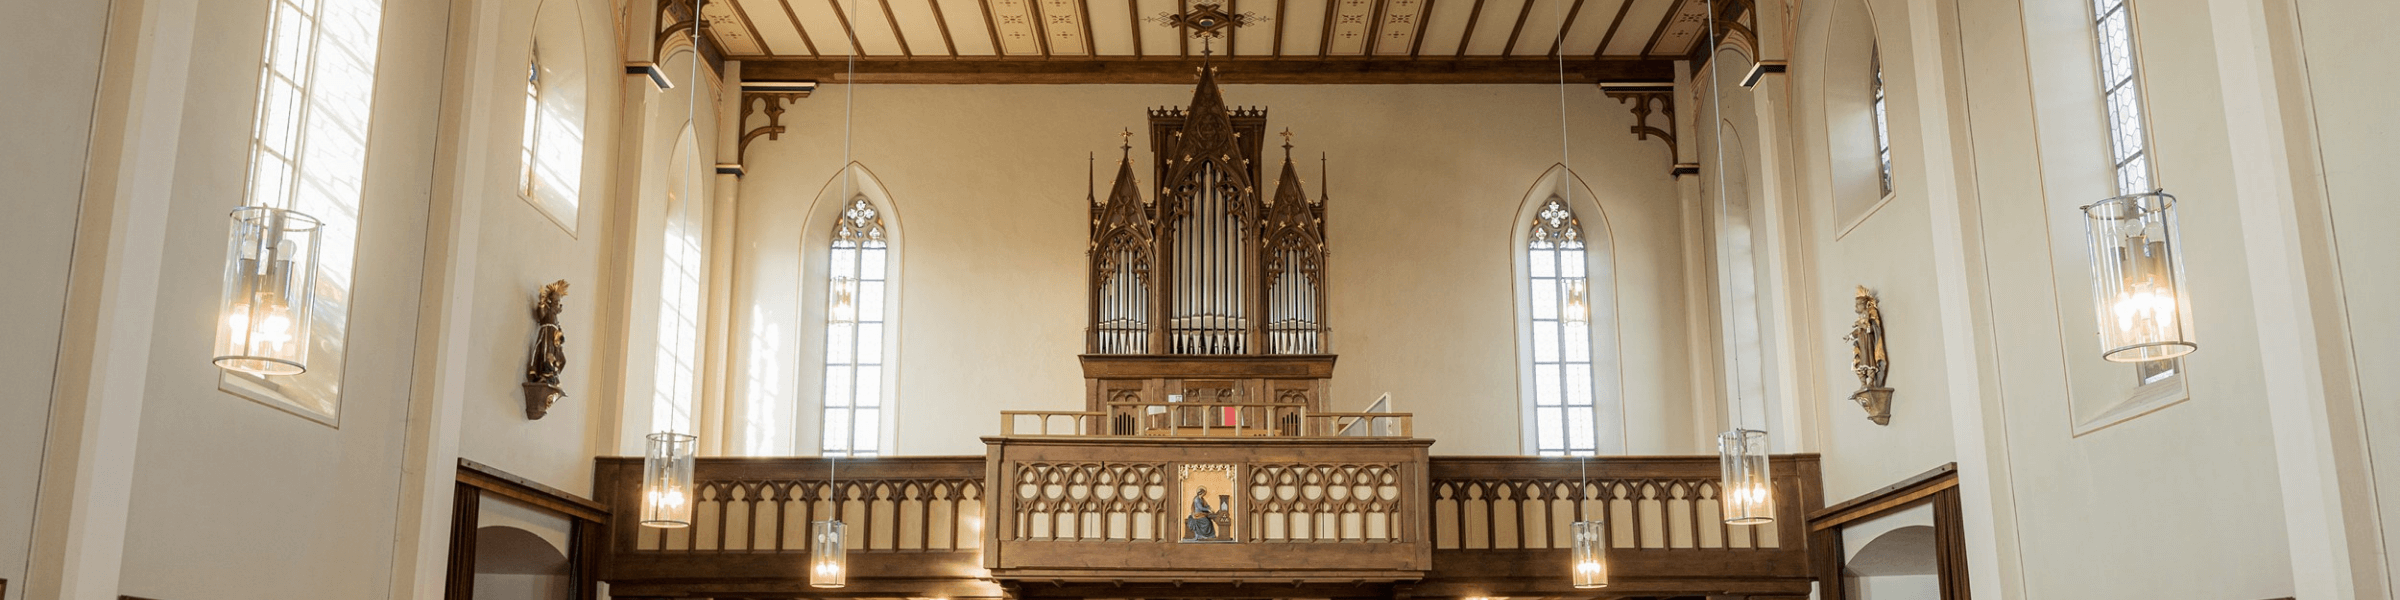 Orgel | Pfarrei Schwanenkirchen